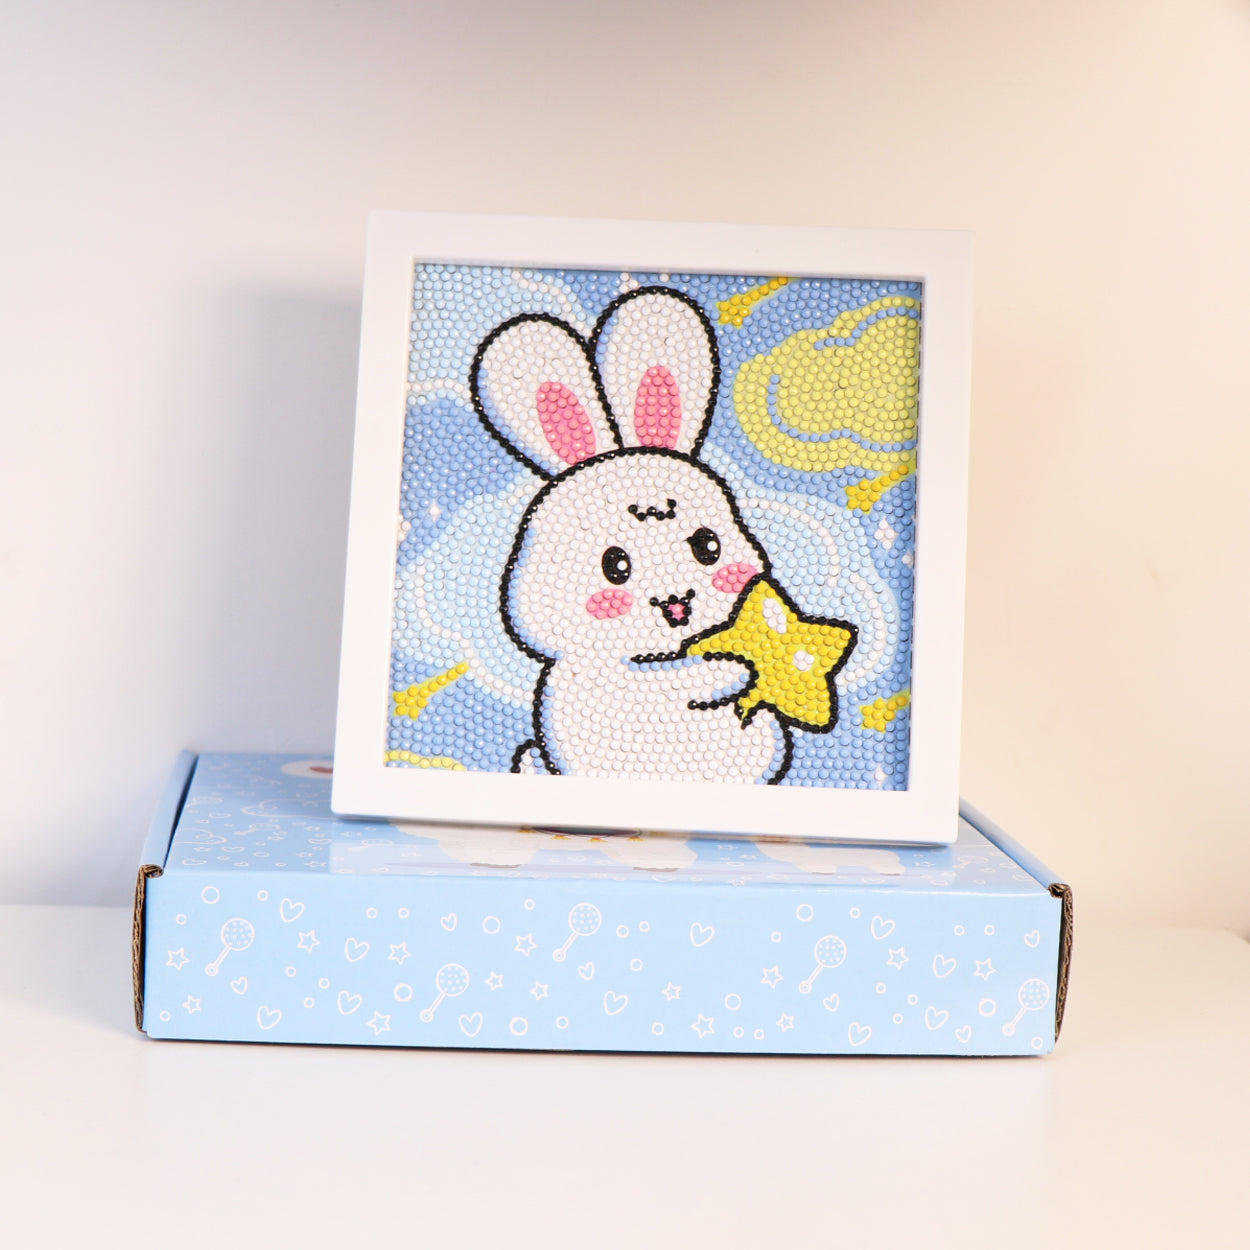 🔥LAST DAY 80% OFF-Wishing Rabbit Diamond Painting Kit For Kids